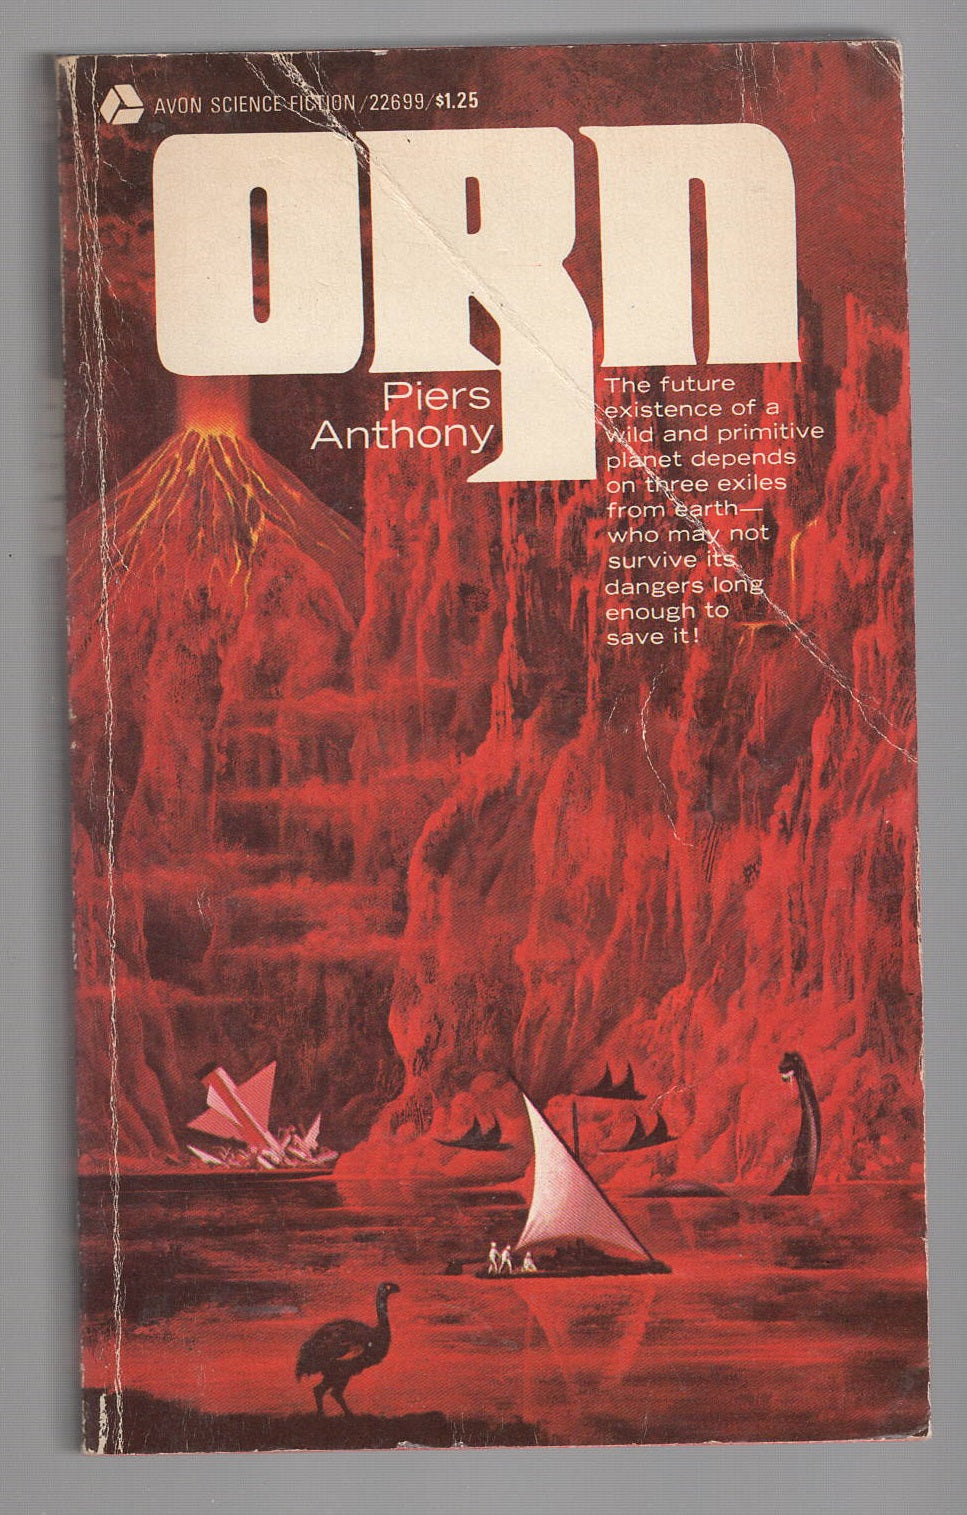 Orn Action Adventure Classic Science Fiction fantasy science fiction Vintage Books